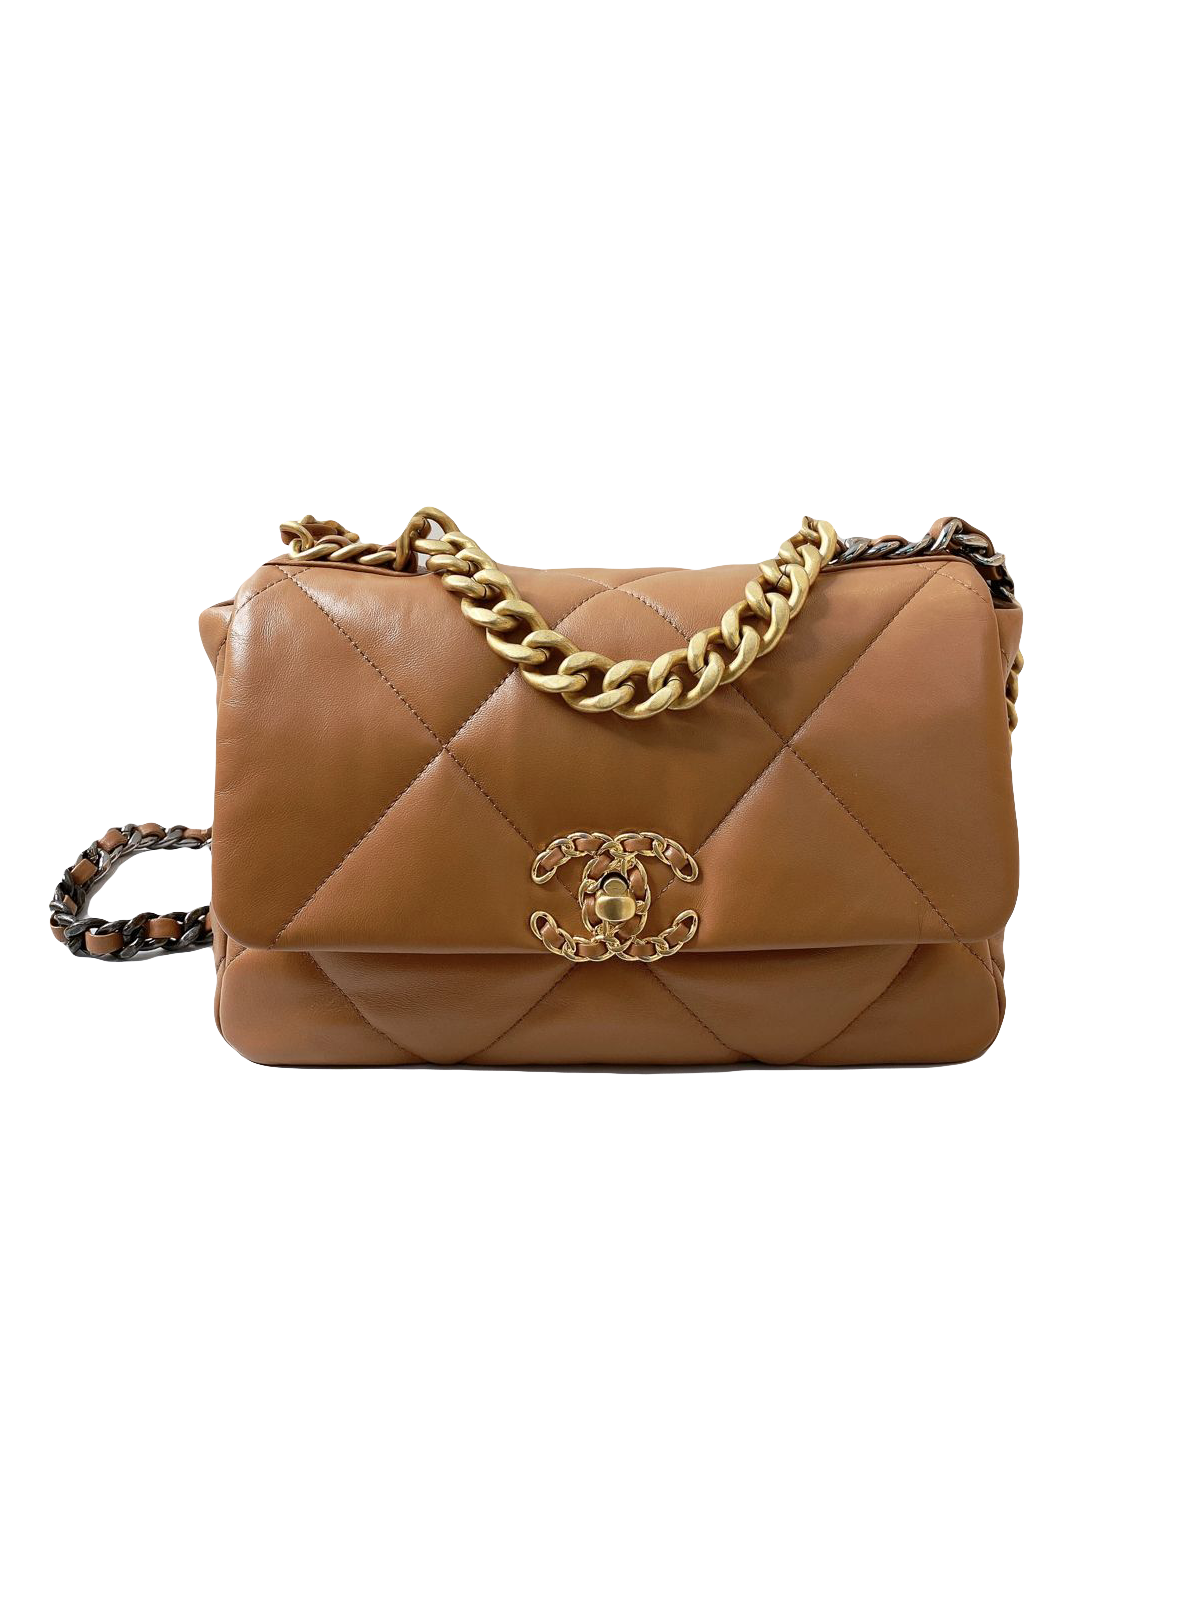 Chanel 19 Bag Small 21p Caramel Handbagholic (@handbag_holic) on